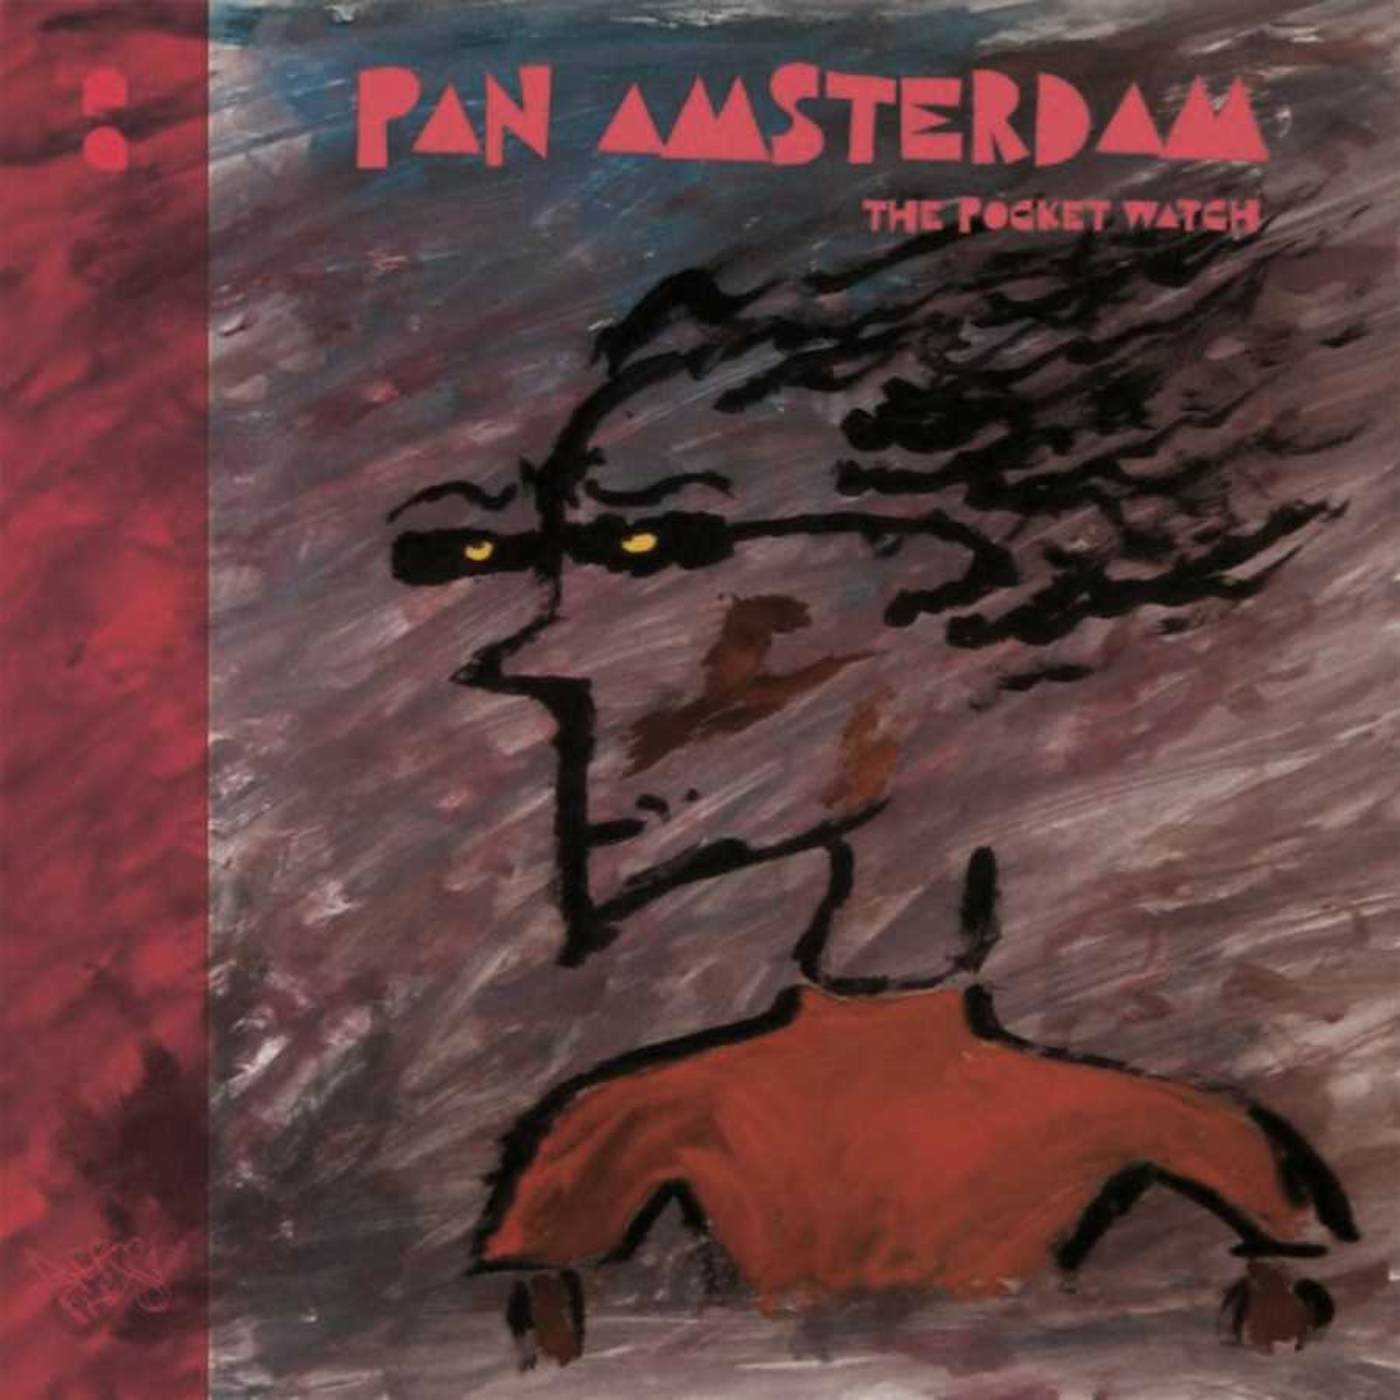 Pan Amsterdam The Pocket Watch(Lp) Vinyl Record